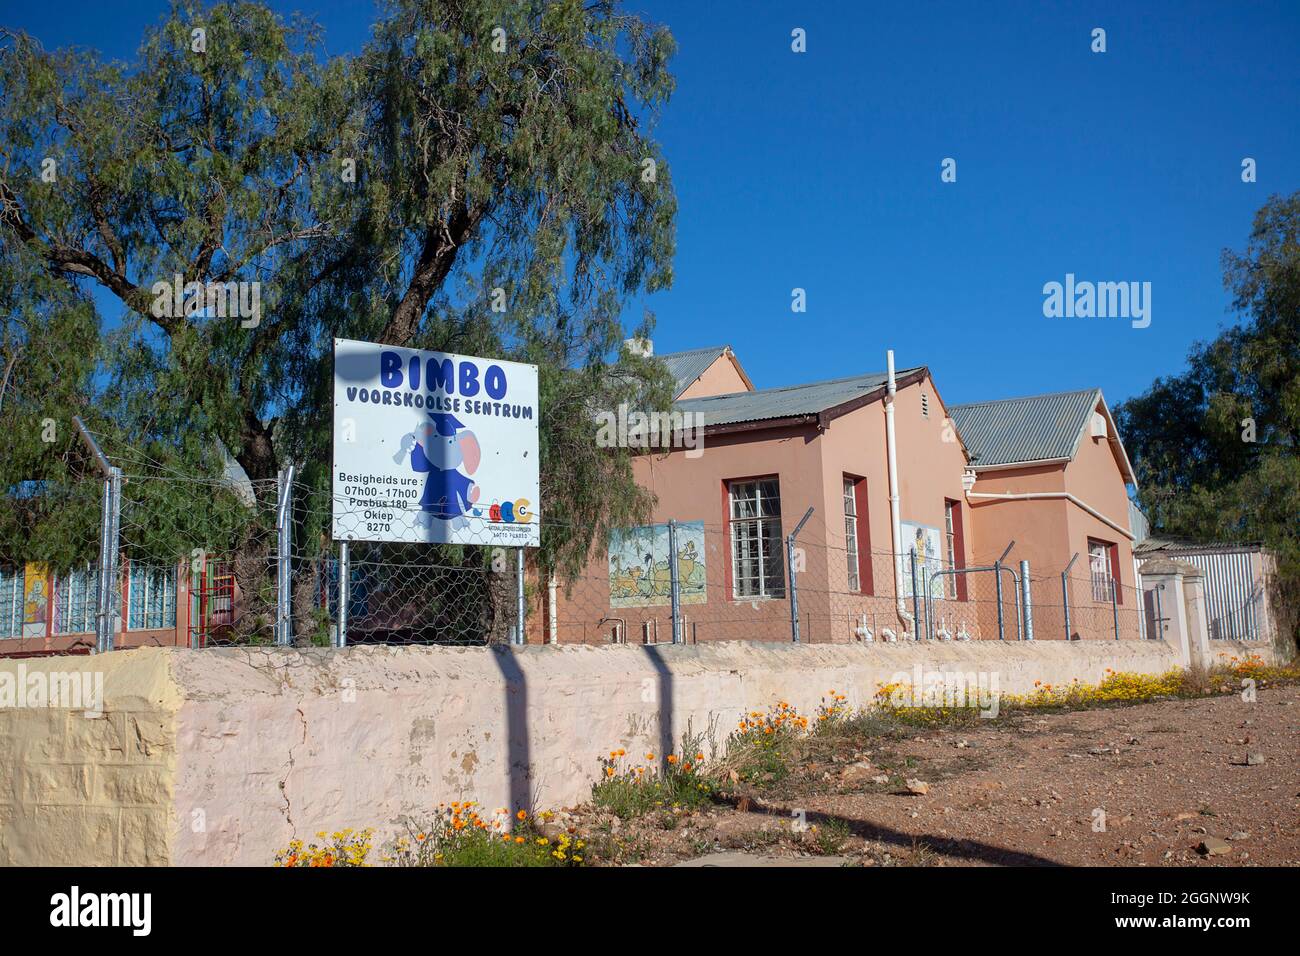 Bimbo Voorskoolse Sentrum Escuela de Preprimaria Okiep, Cabo Norte Foto de stock